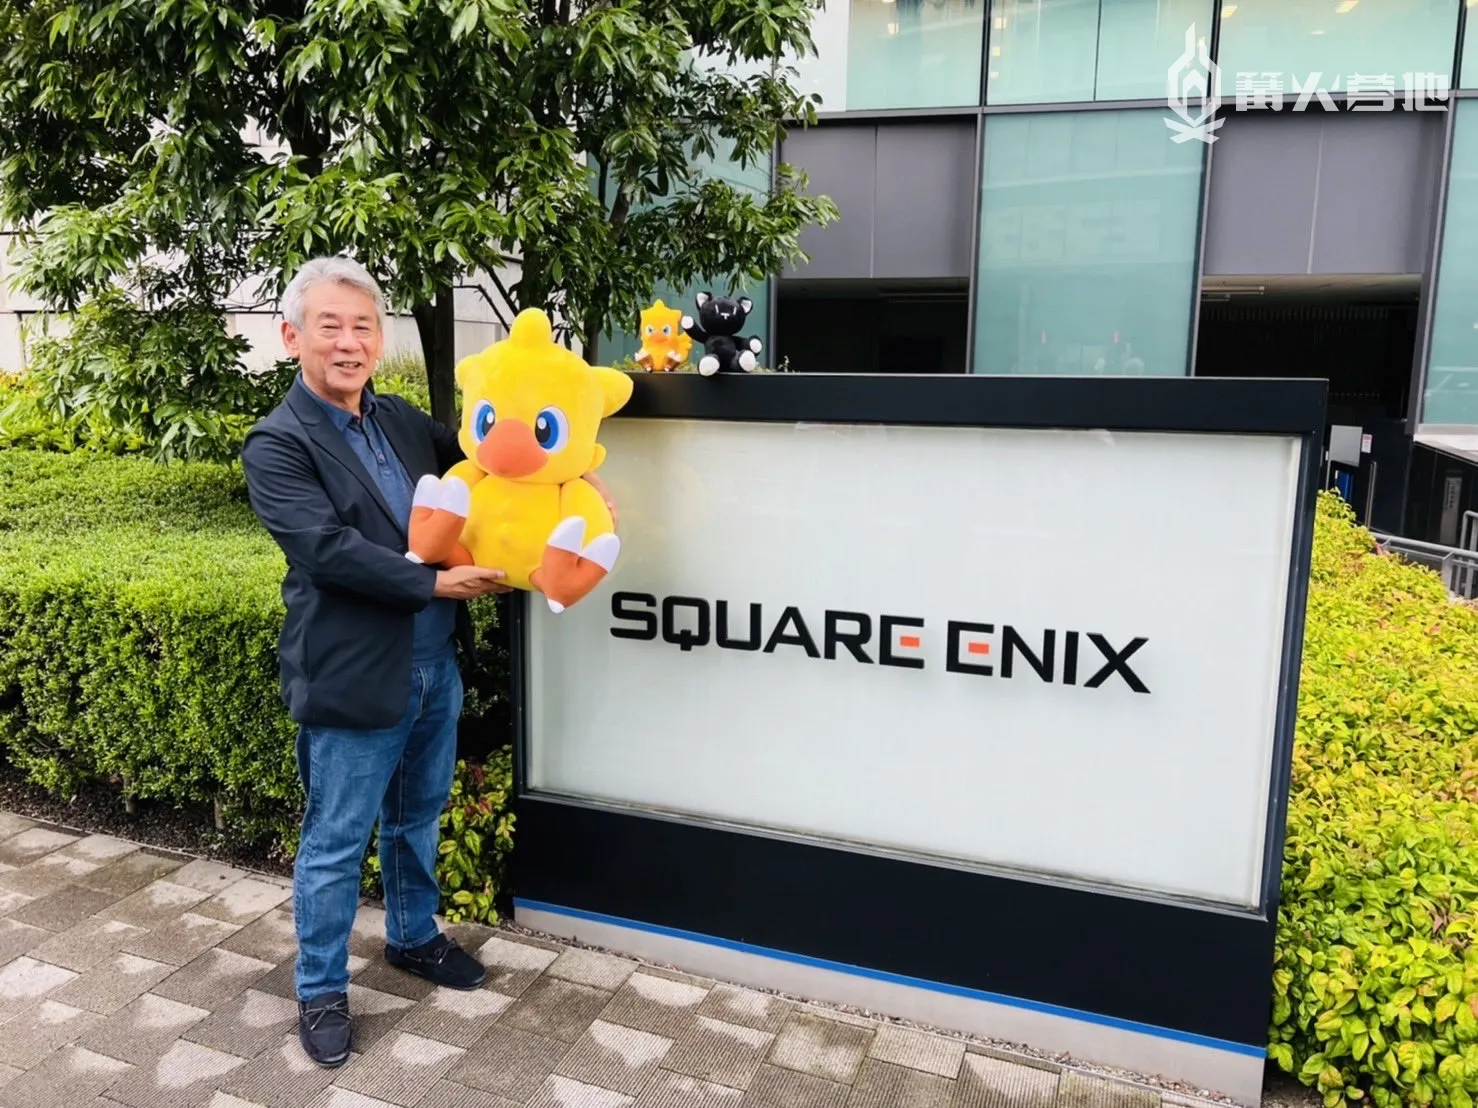 Square Enix 系列遊戲執行製作人橋本真司宣告退休